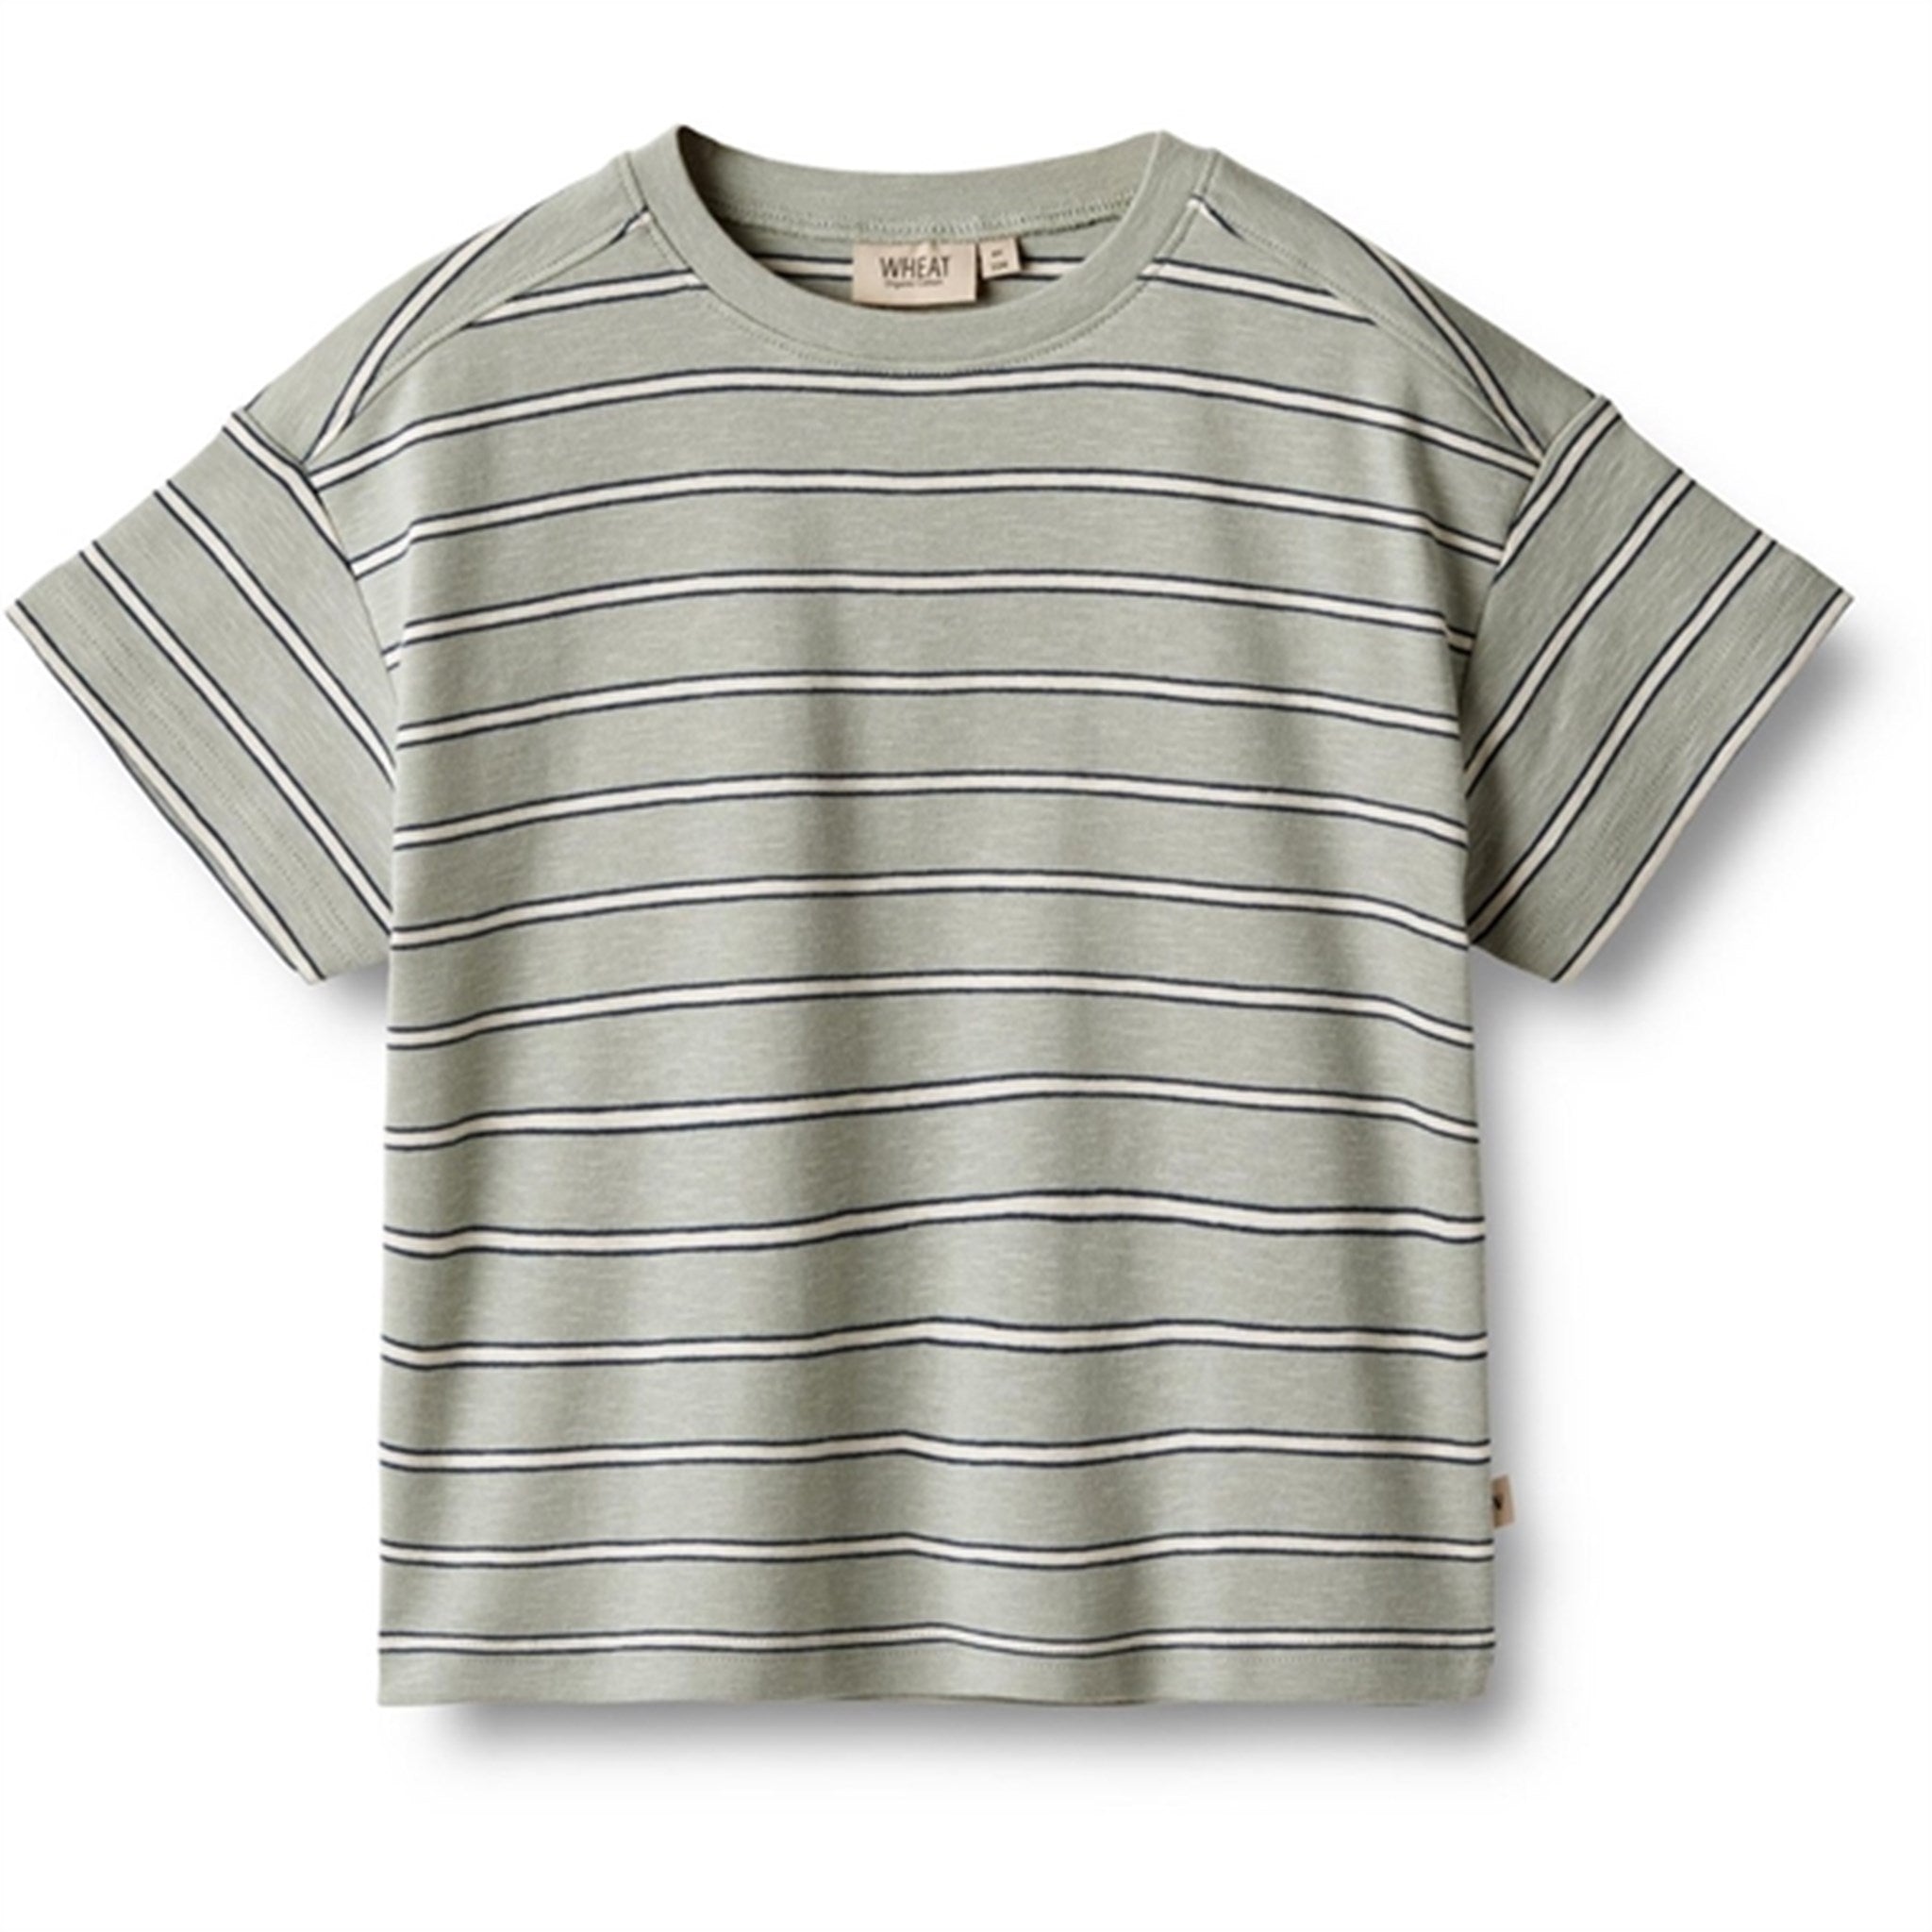 Wheat Sea Mist Stripe T-shirt Tommy